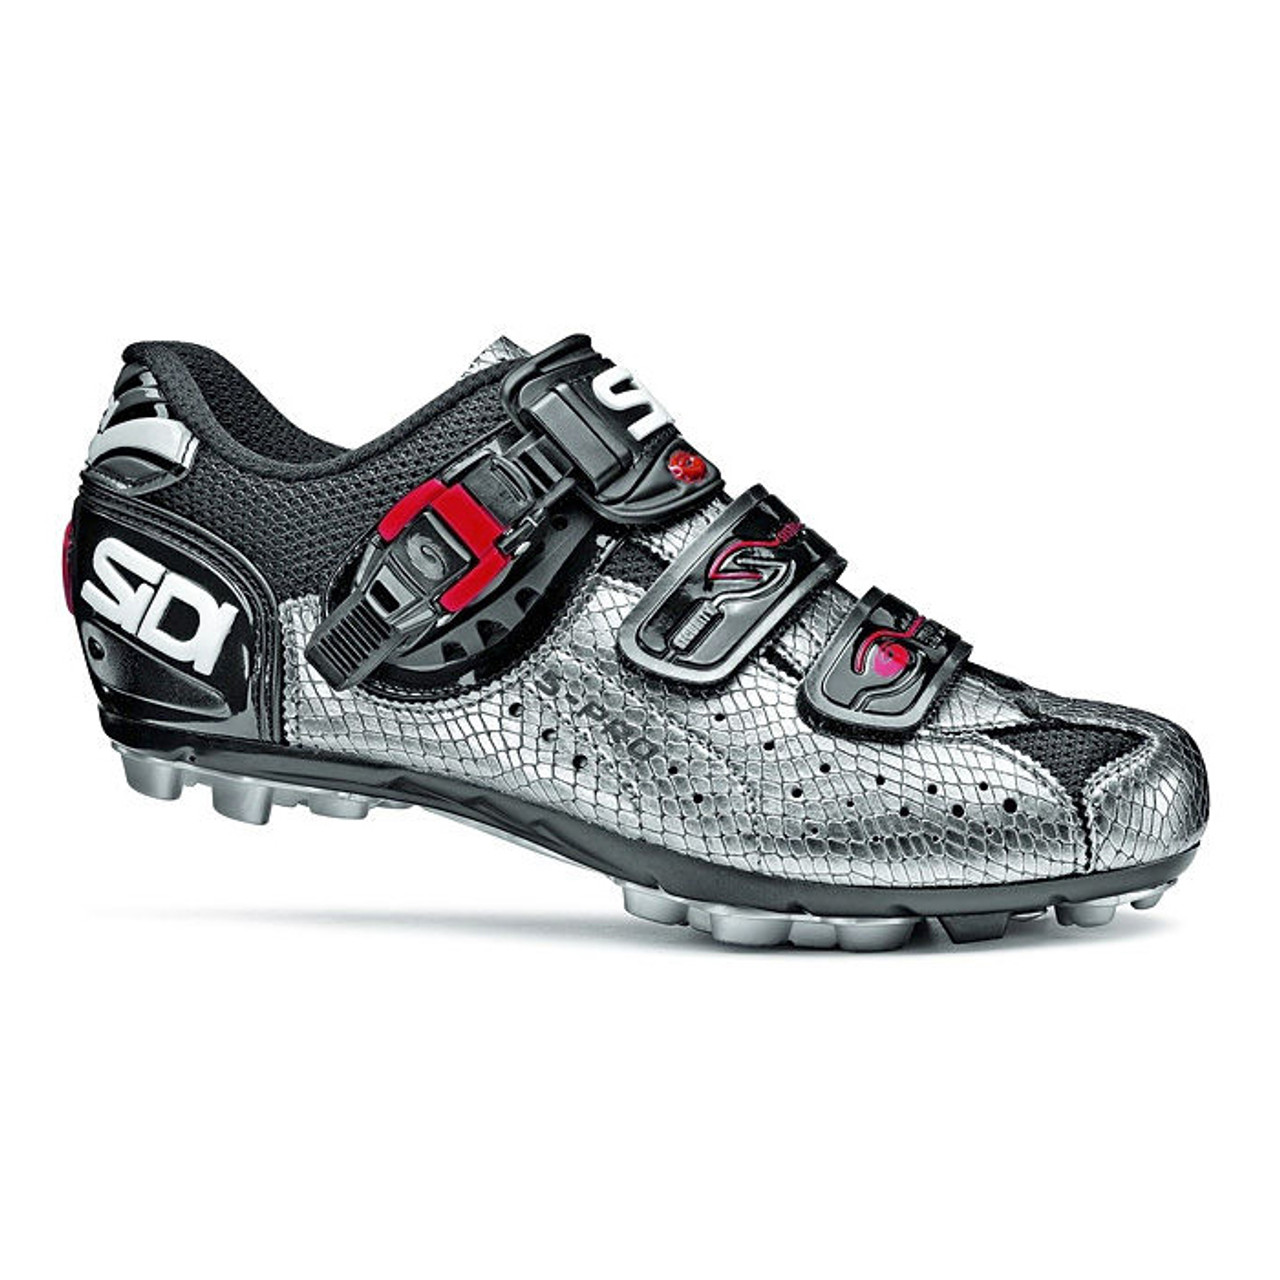 Women's SIDI® Dominator 5 Silver Mamba MTB Shoes | Spinning®